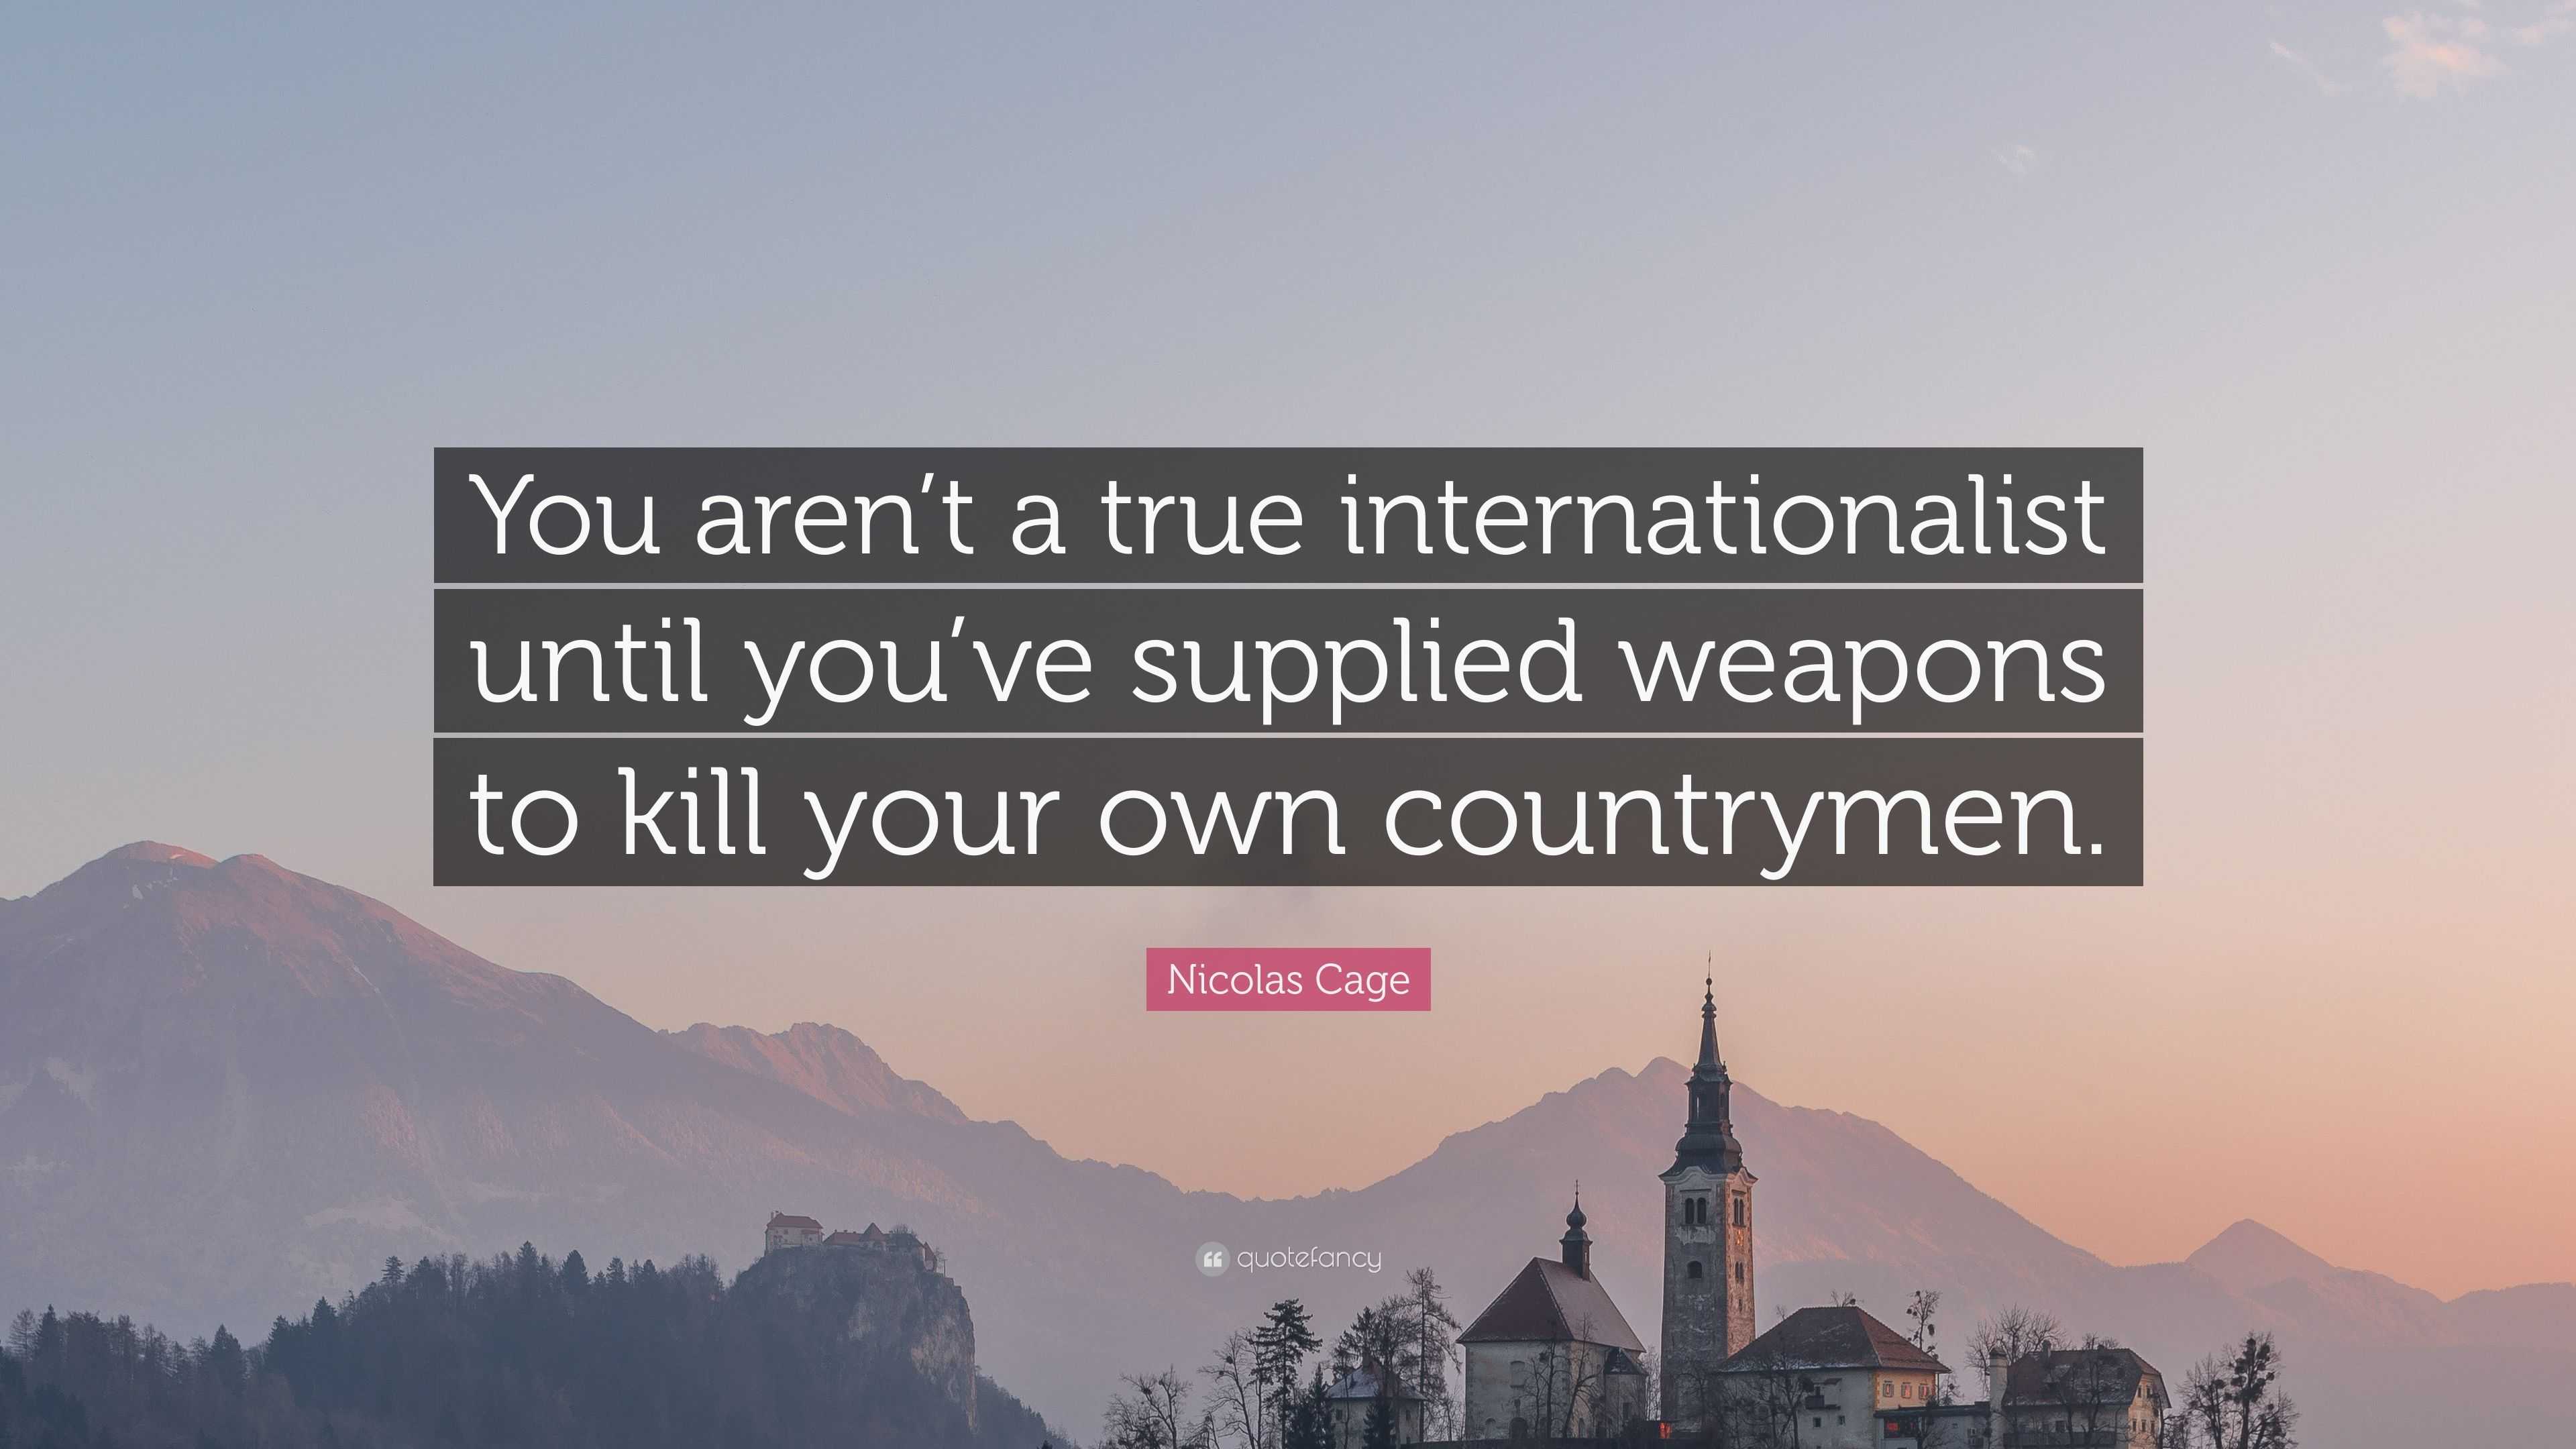 Nicolas Cage Quote: “You aren’t a true internationalist until you’ve ...